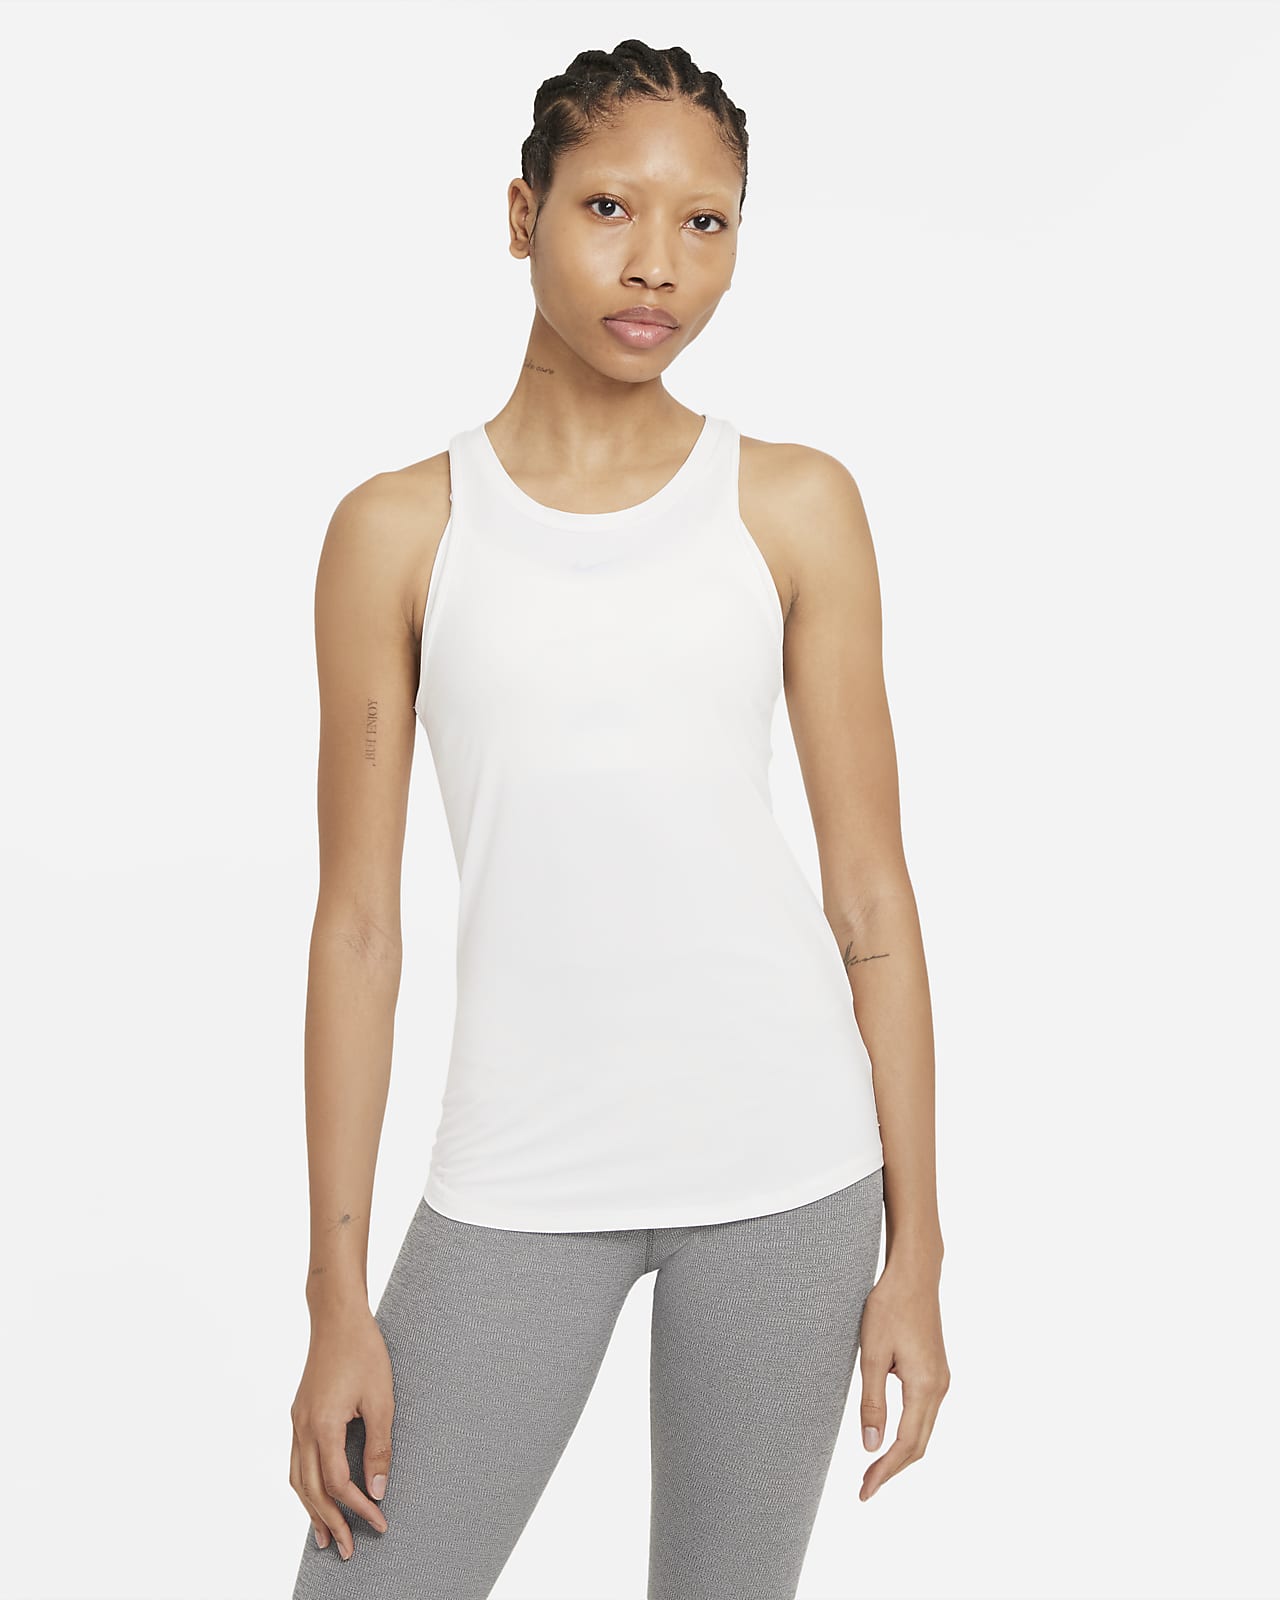 Women's top Nike Dri-Fit One Slim Tank - polar/white, Tennis Zone